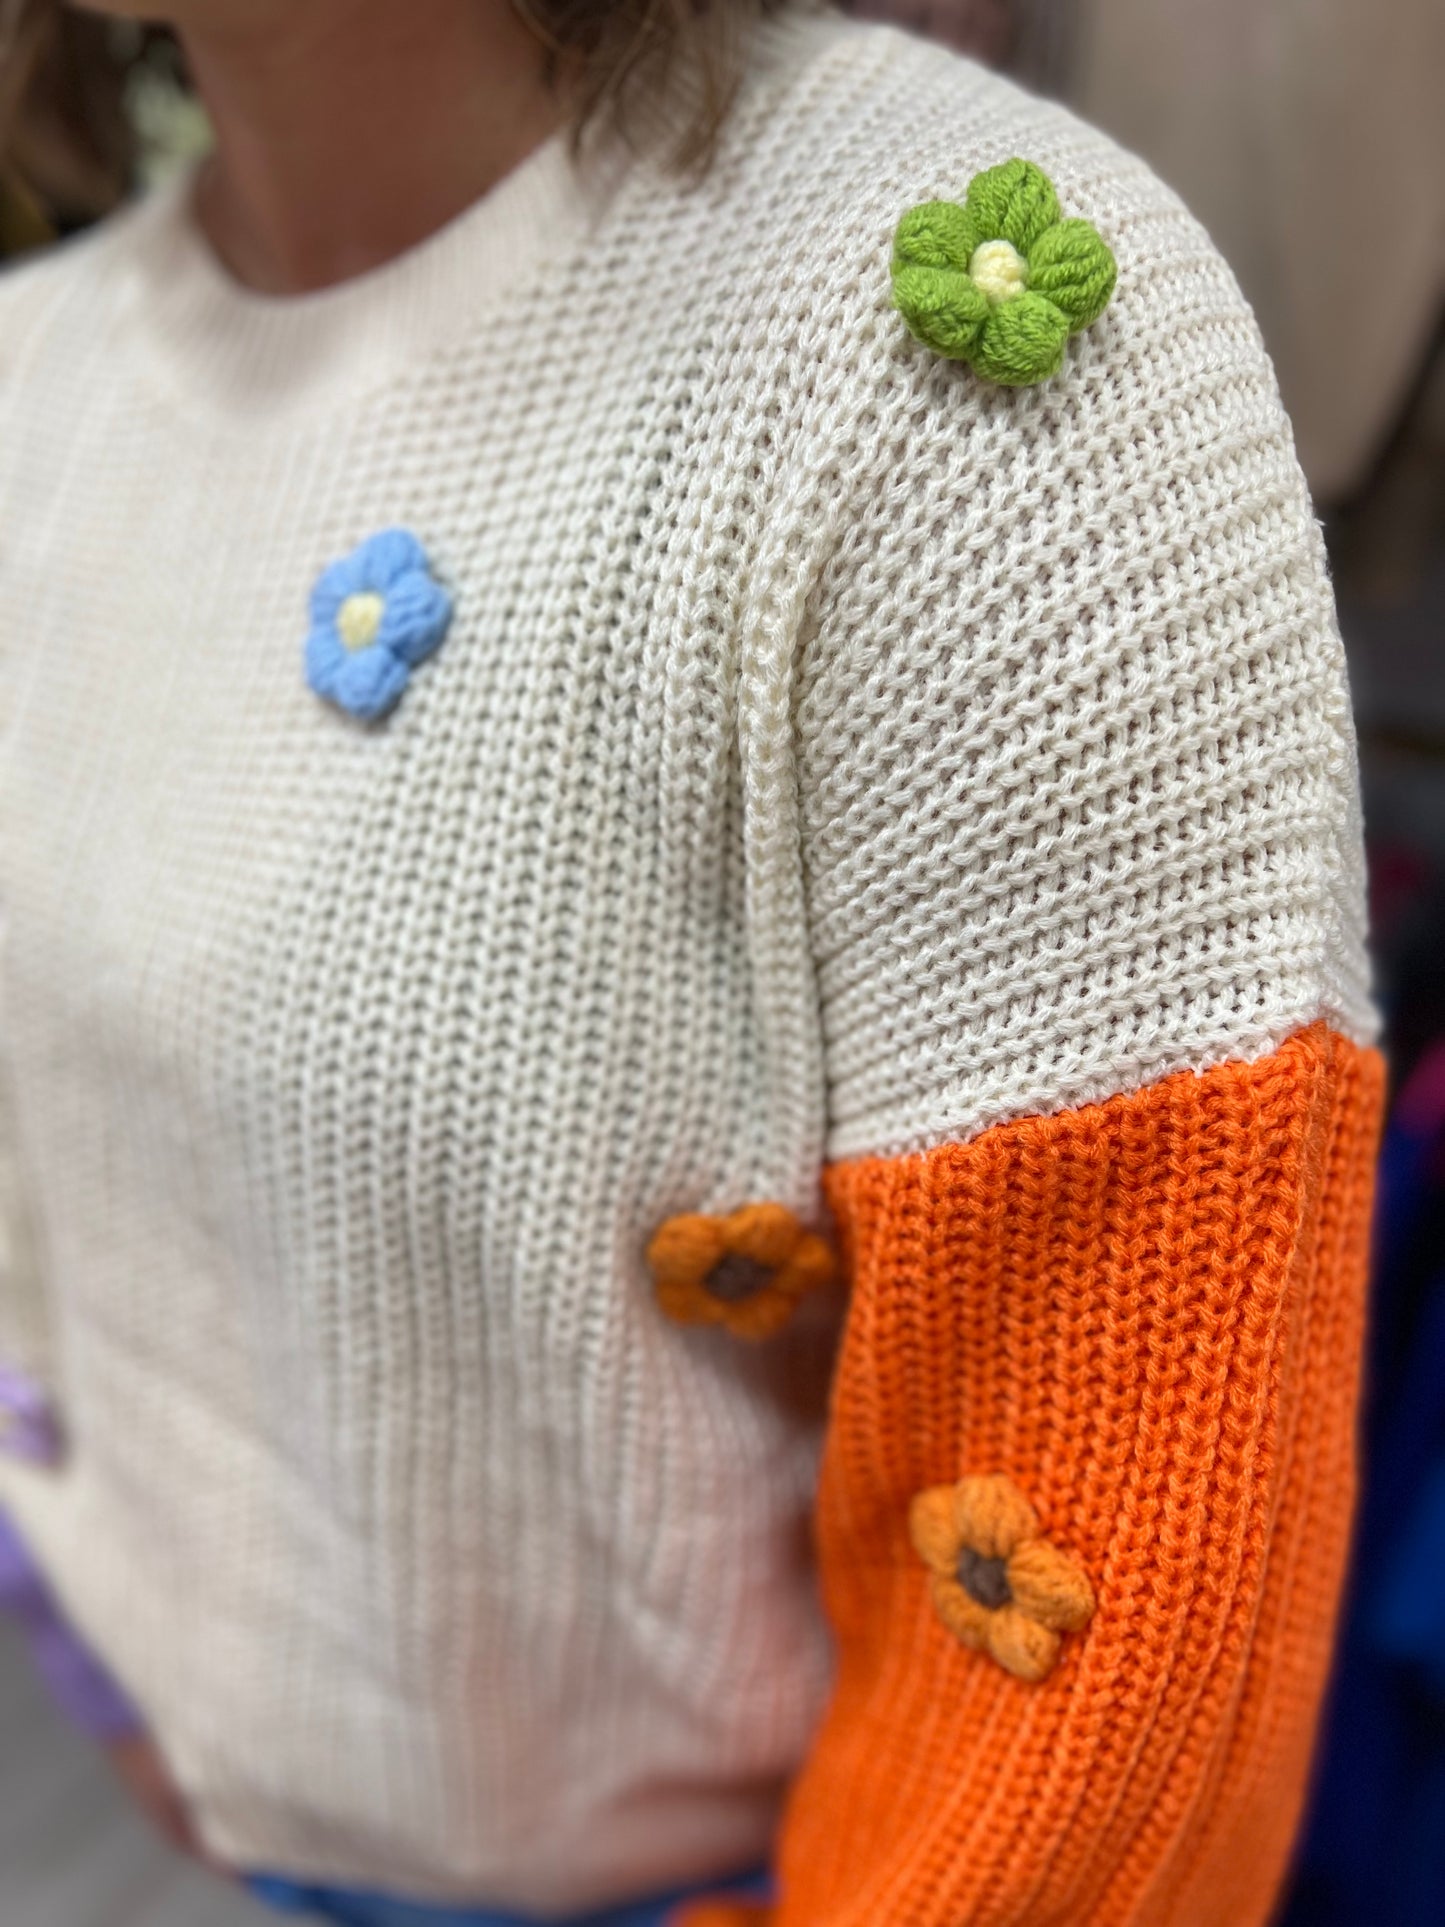 Crocheted flowered sweater